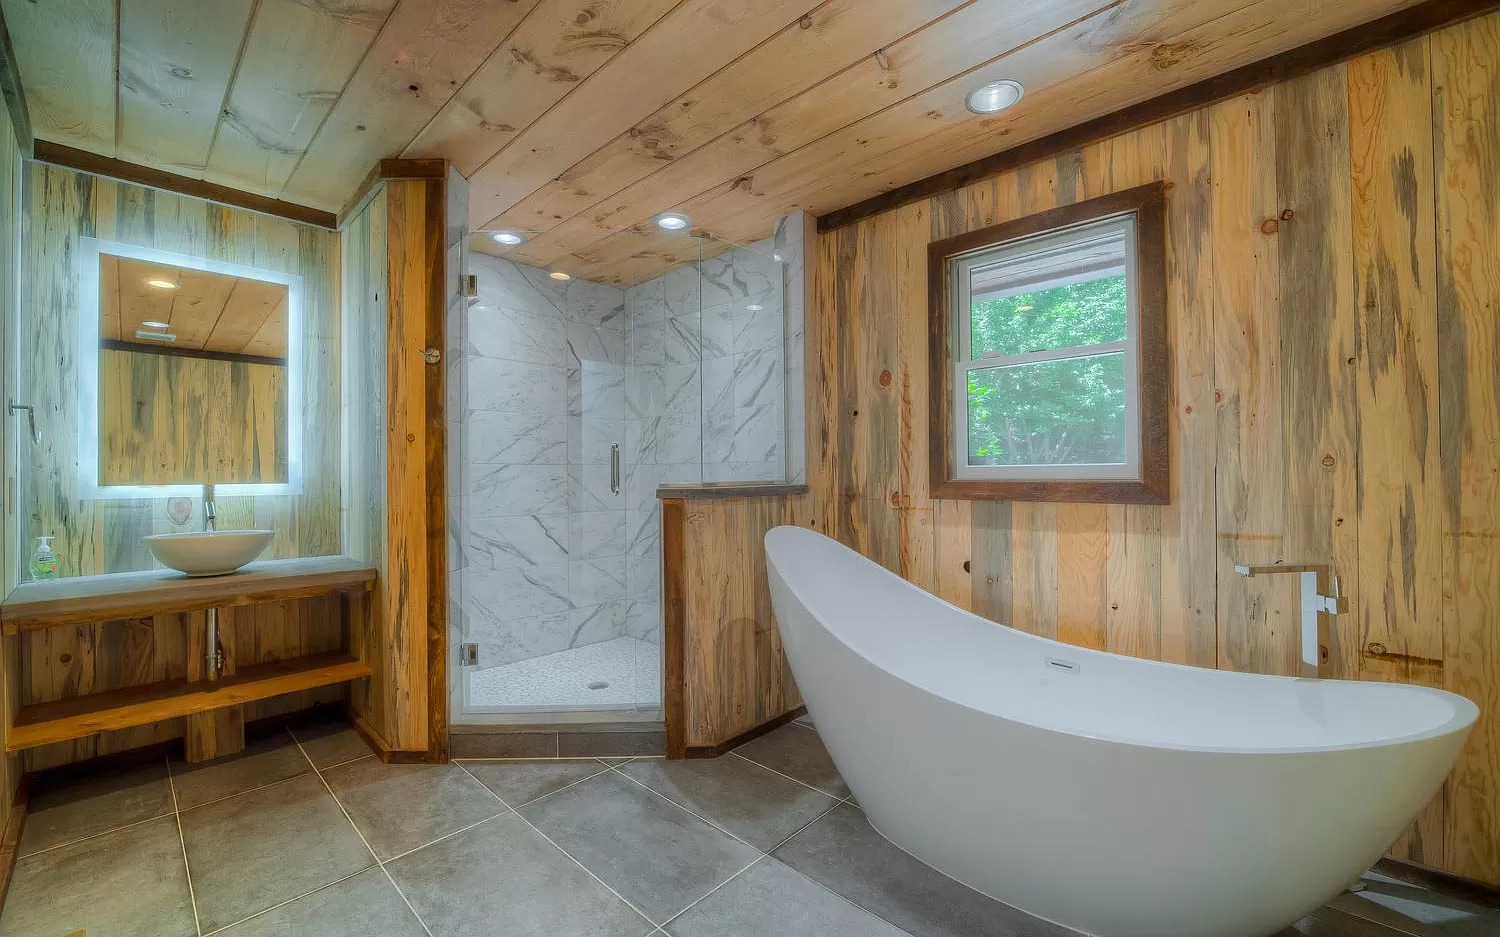 The inside of a luxury cabin bathroom